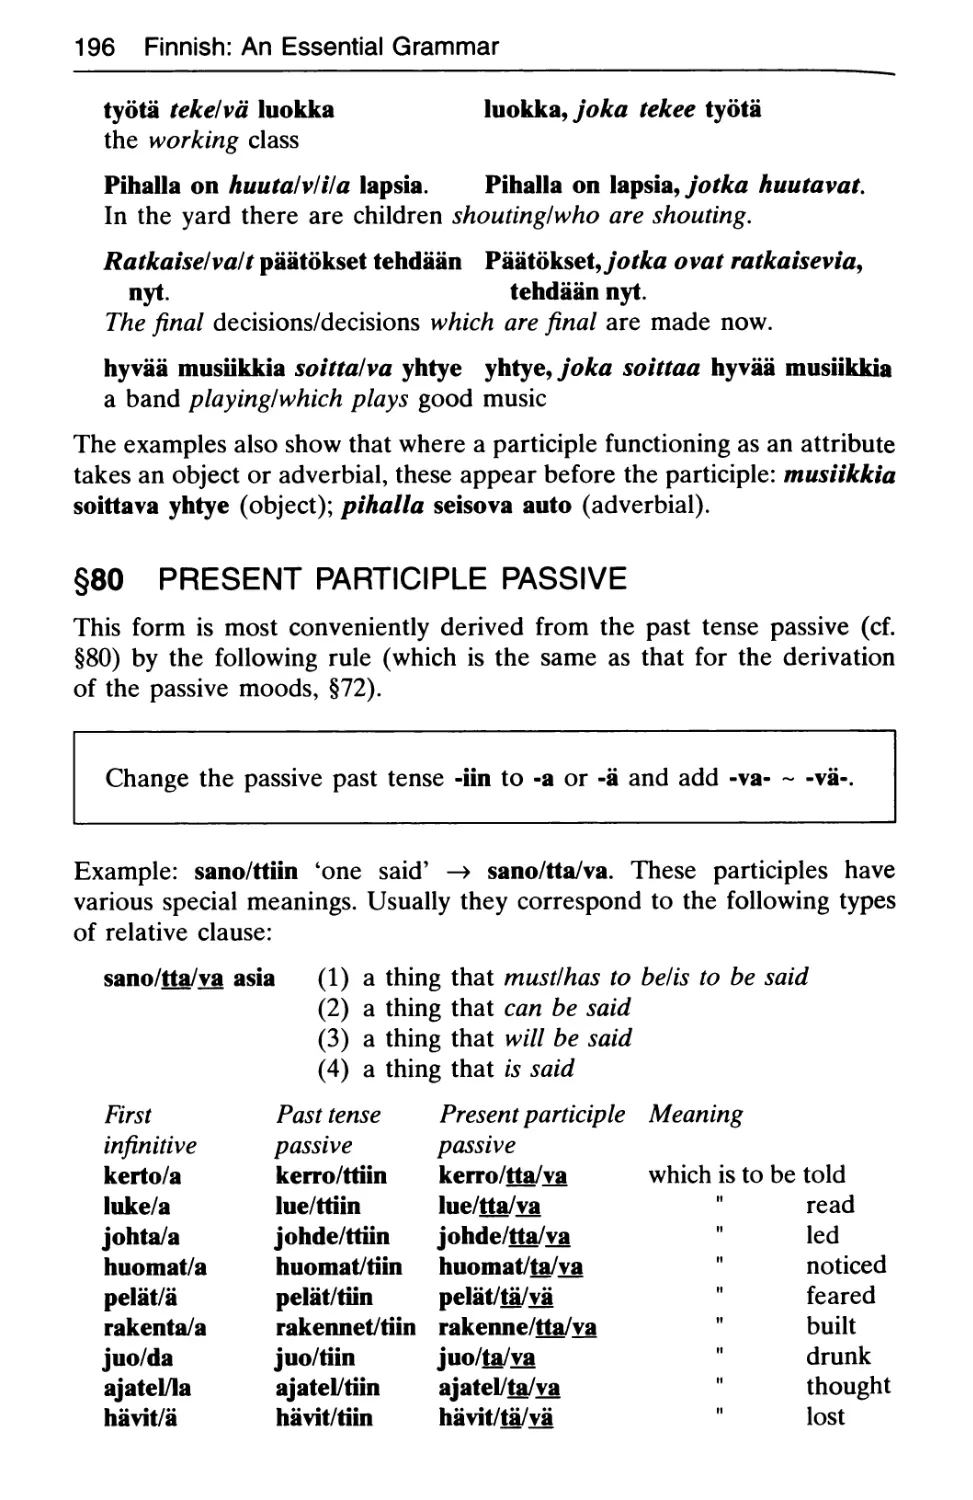 §80 Present participle passive